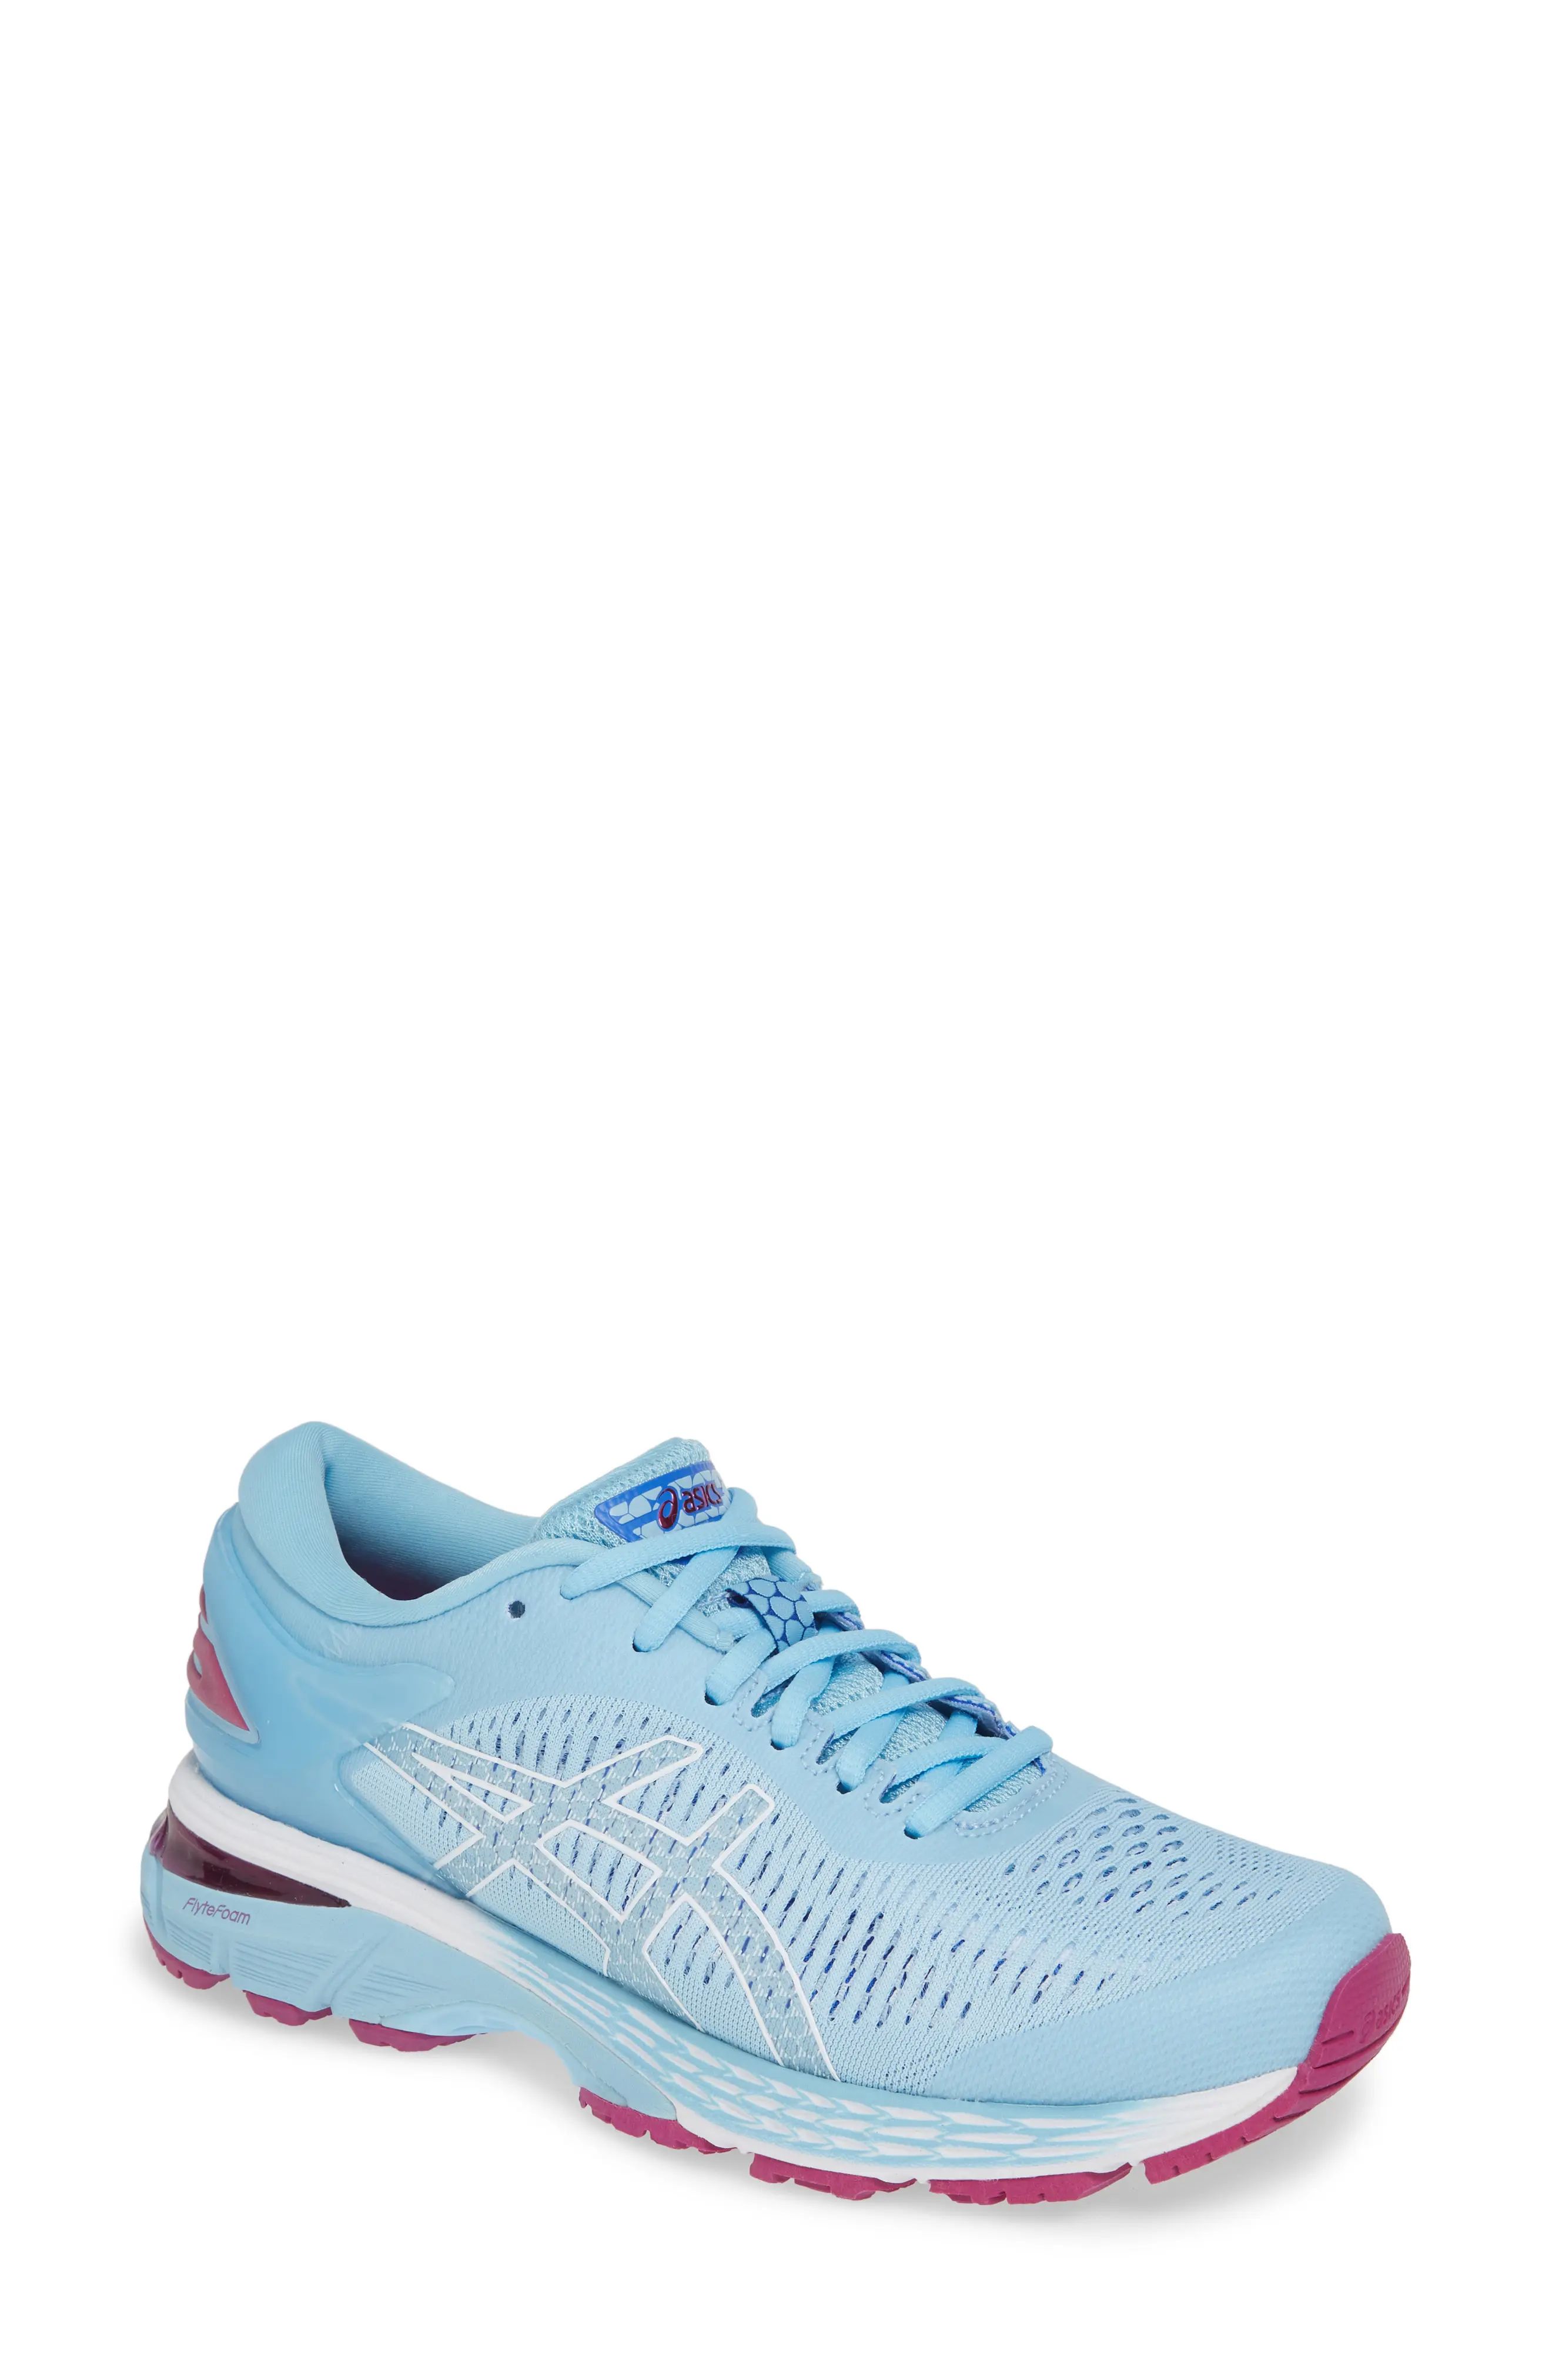 Women's Asics Gel-Kayano 25 Running Shoe, Size 5 B - Blue | Nordstrom